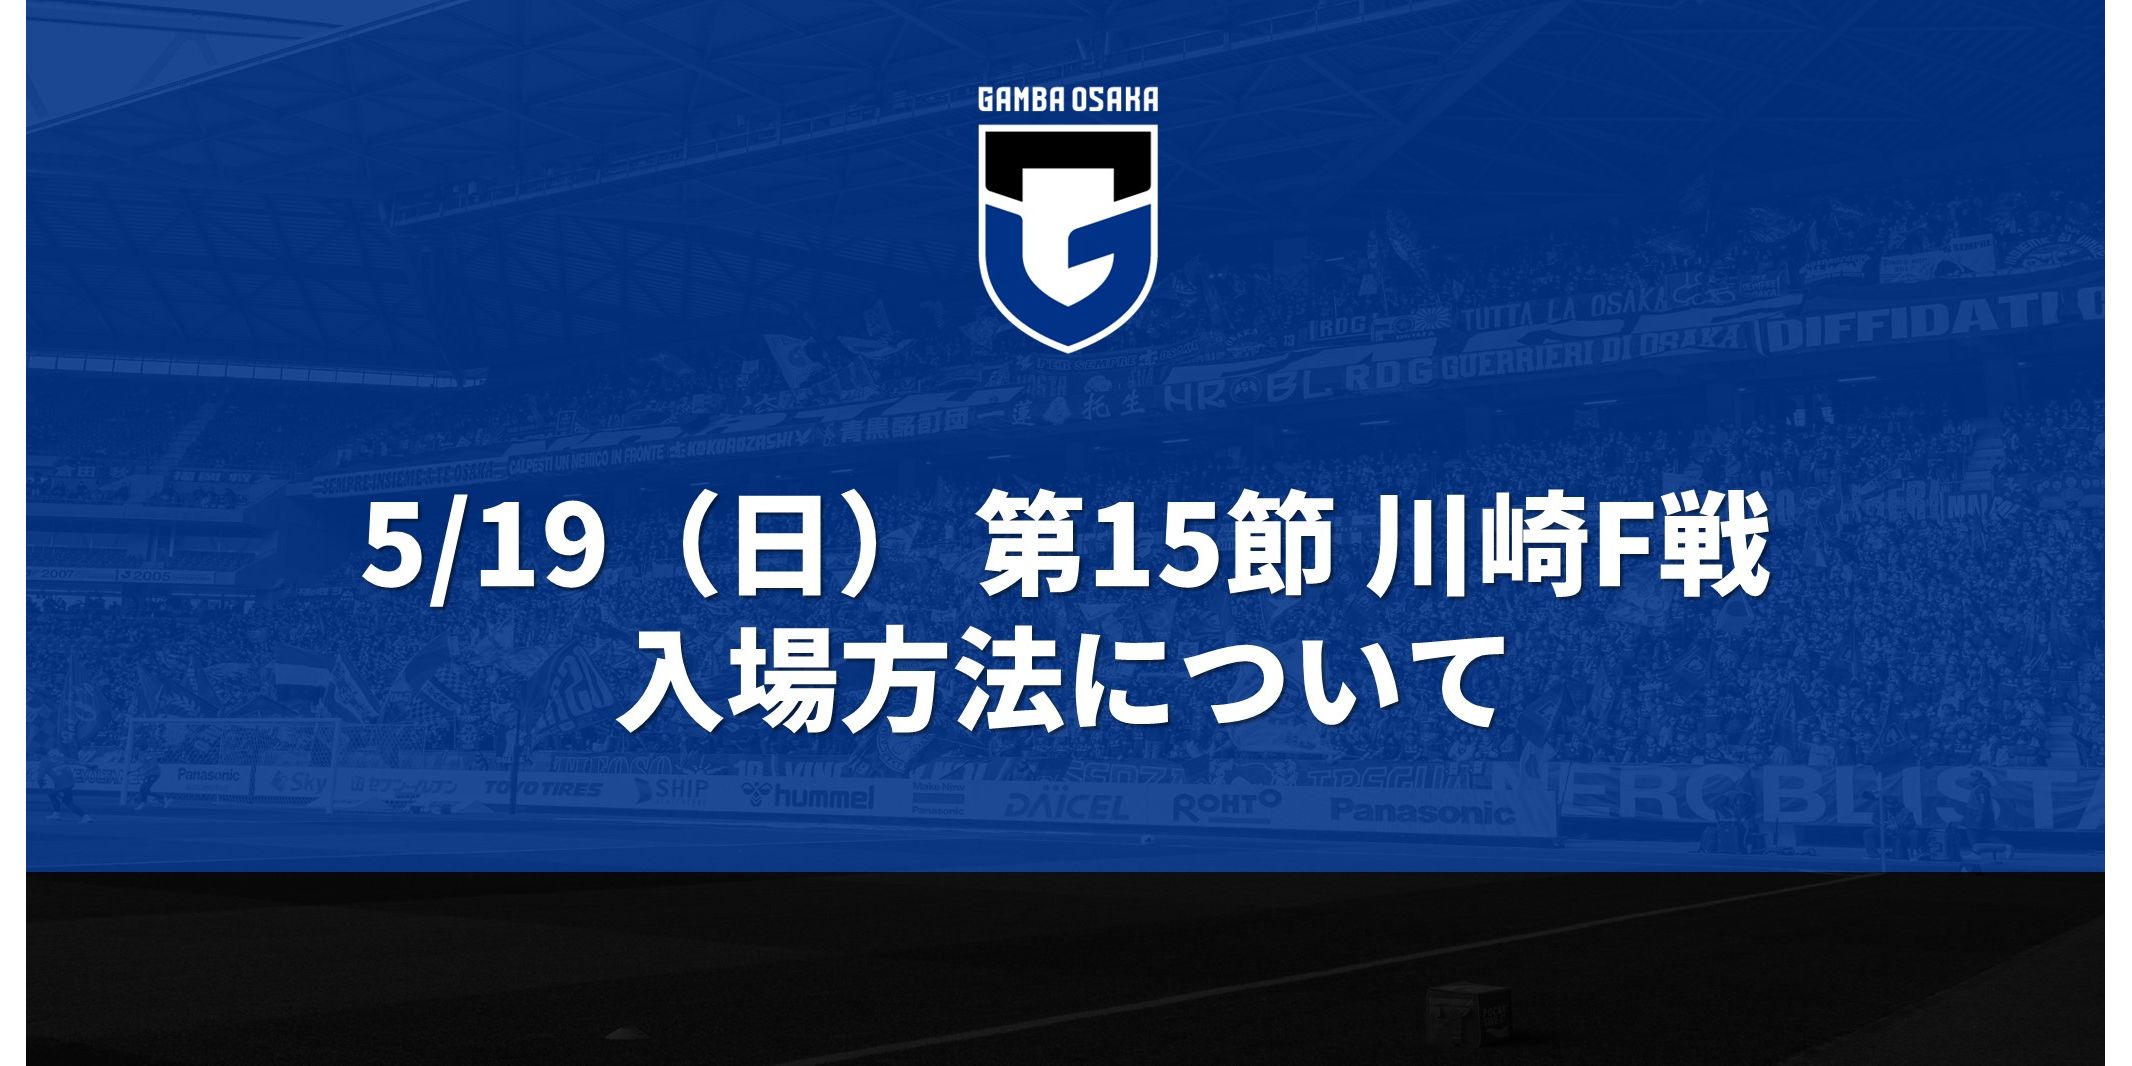 19/05 (dimanche) Match Meiji Yasuda J1 Round 15 Kawasaki F Comment participer | Site officiel de Gamba Osaka